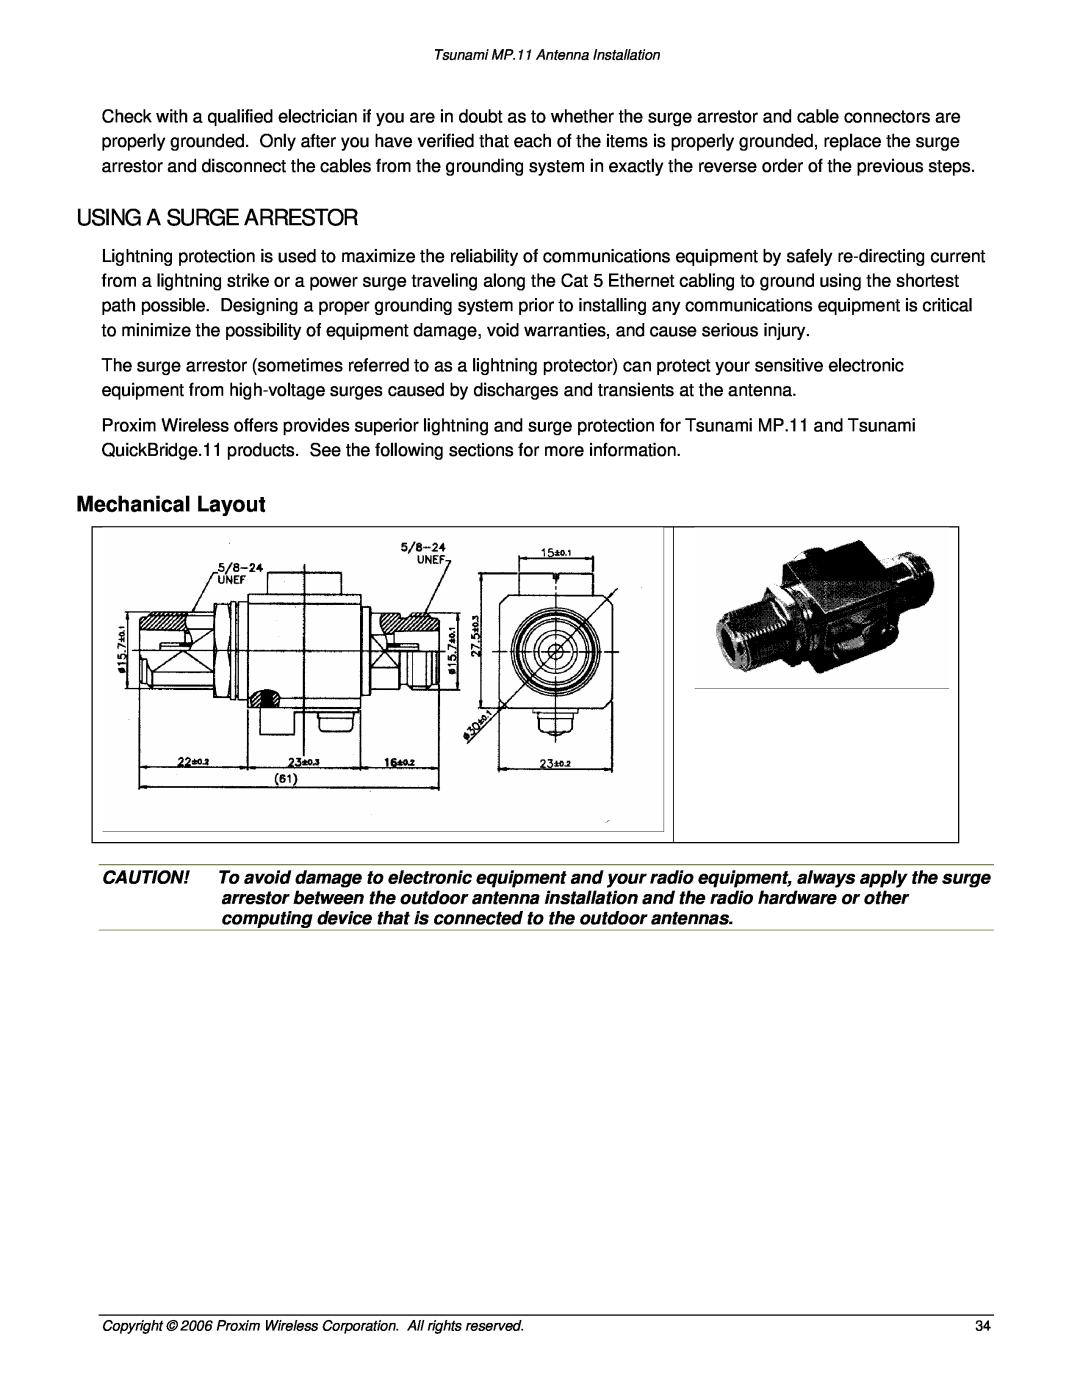 Proxim Tsunami MP.11 manual Using A Surge Arrestor, Mechanical Layout 